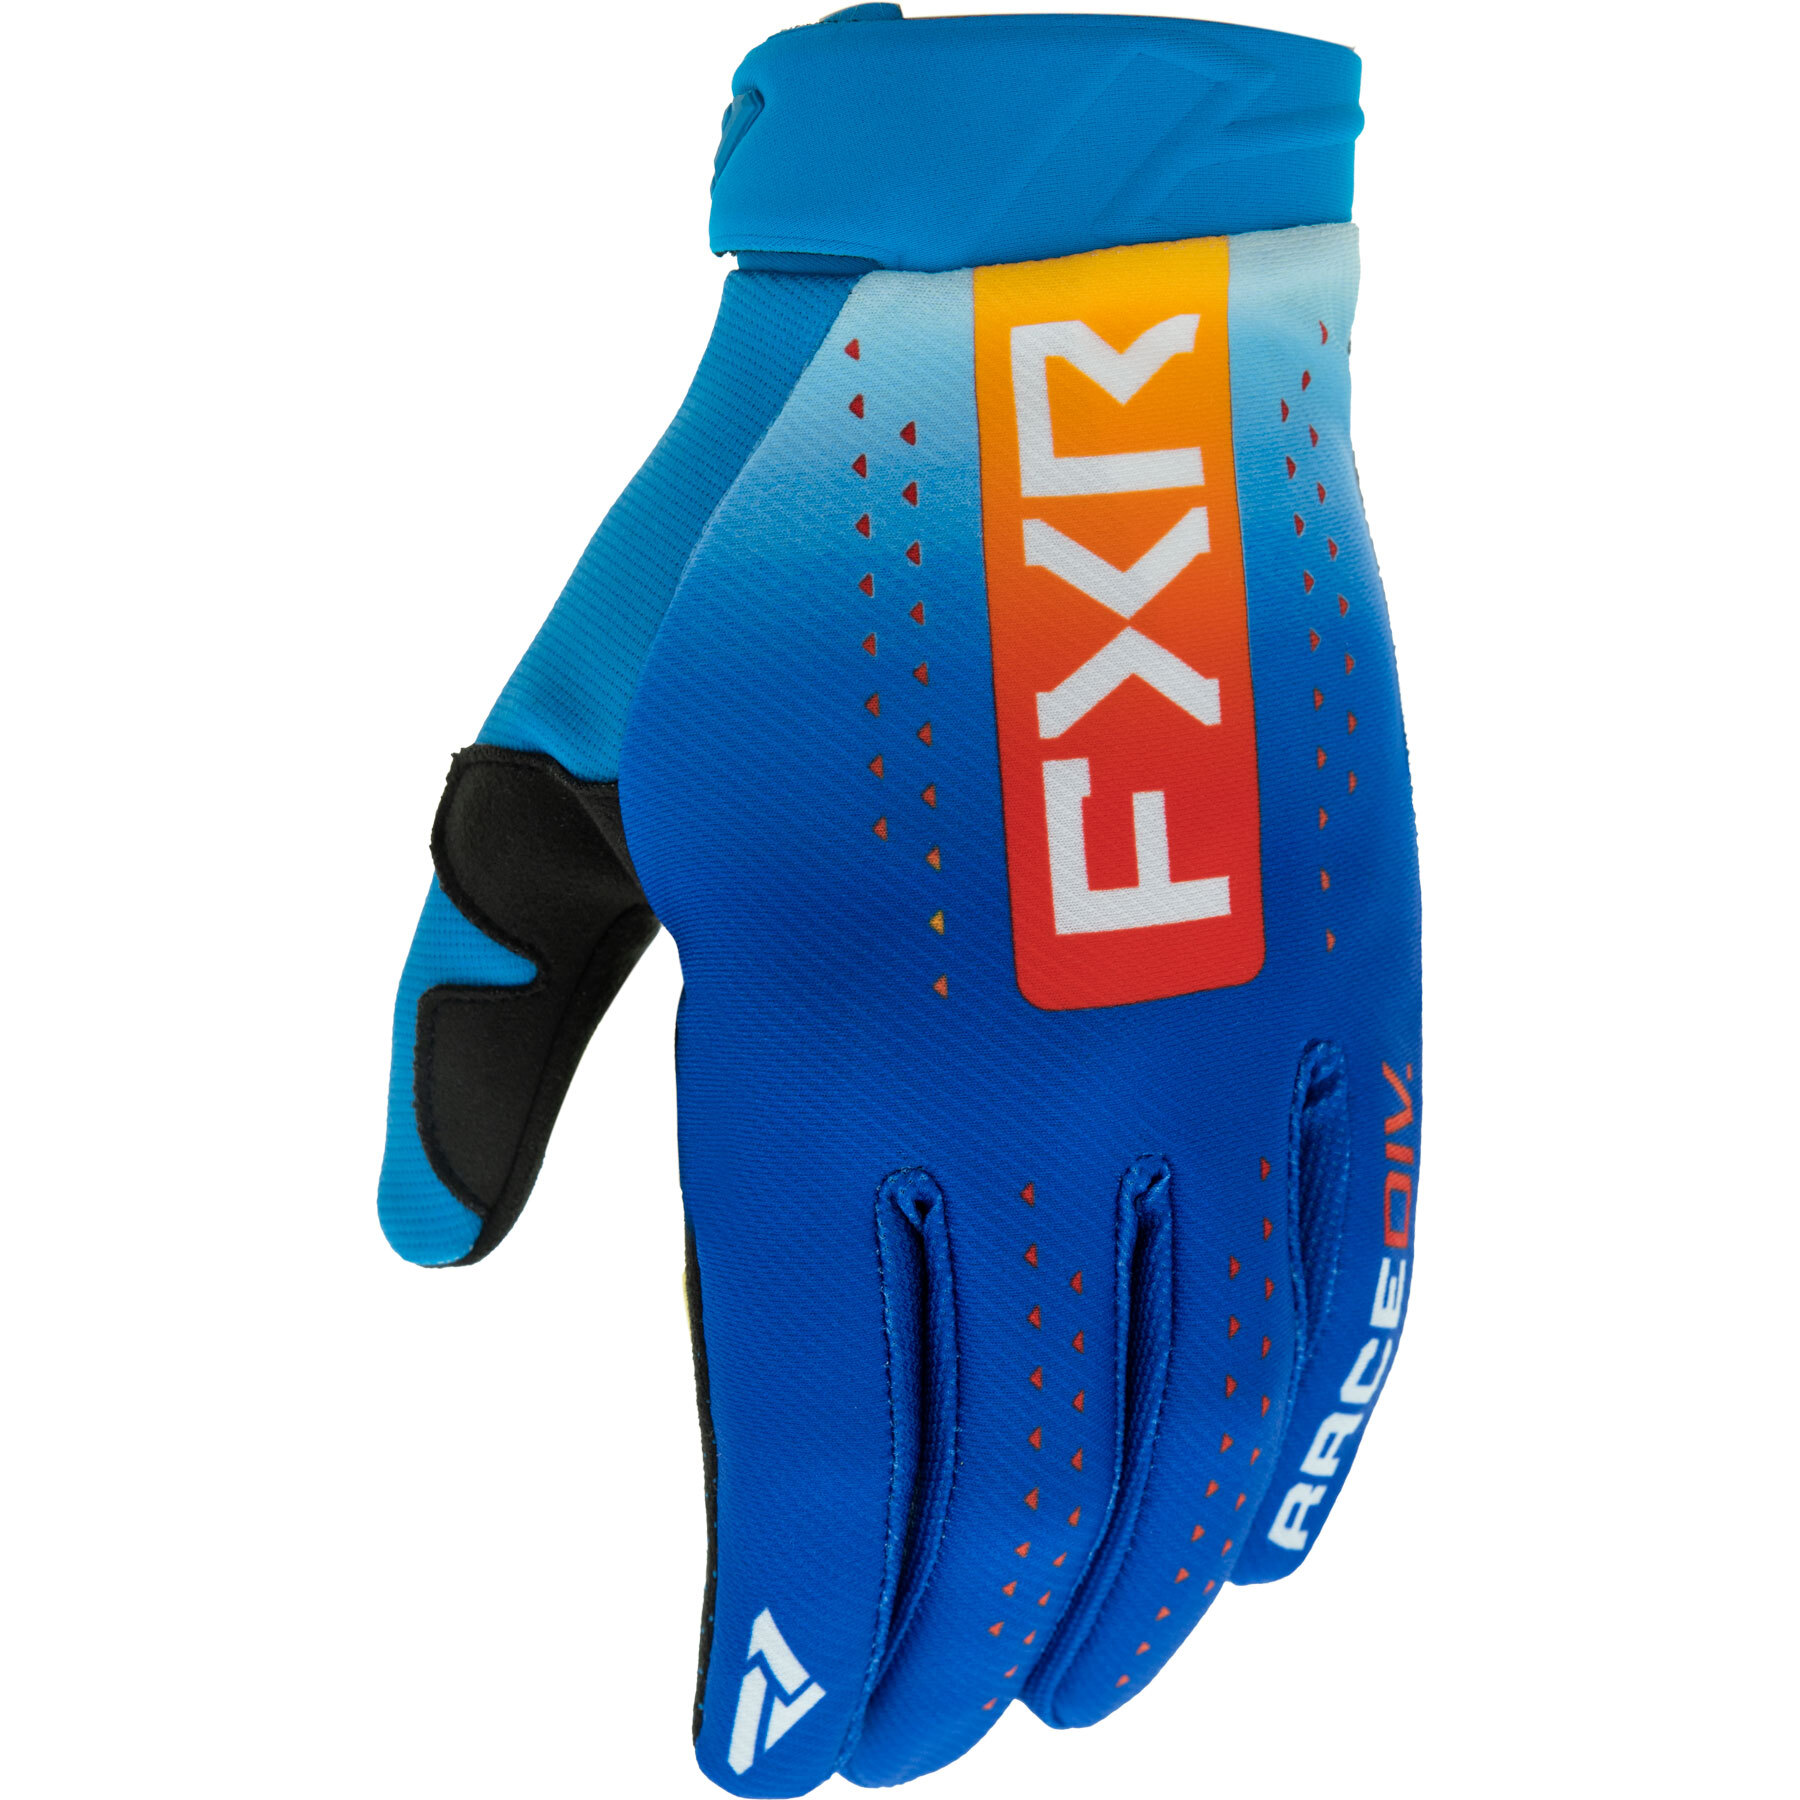 Reflex MX Gloves by FXR®